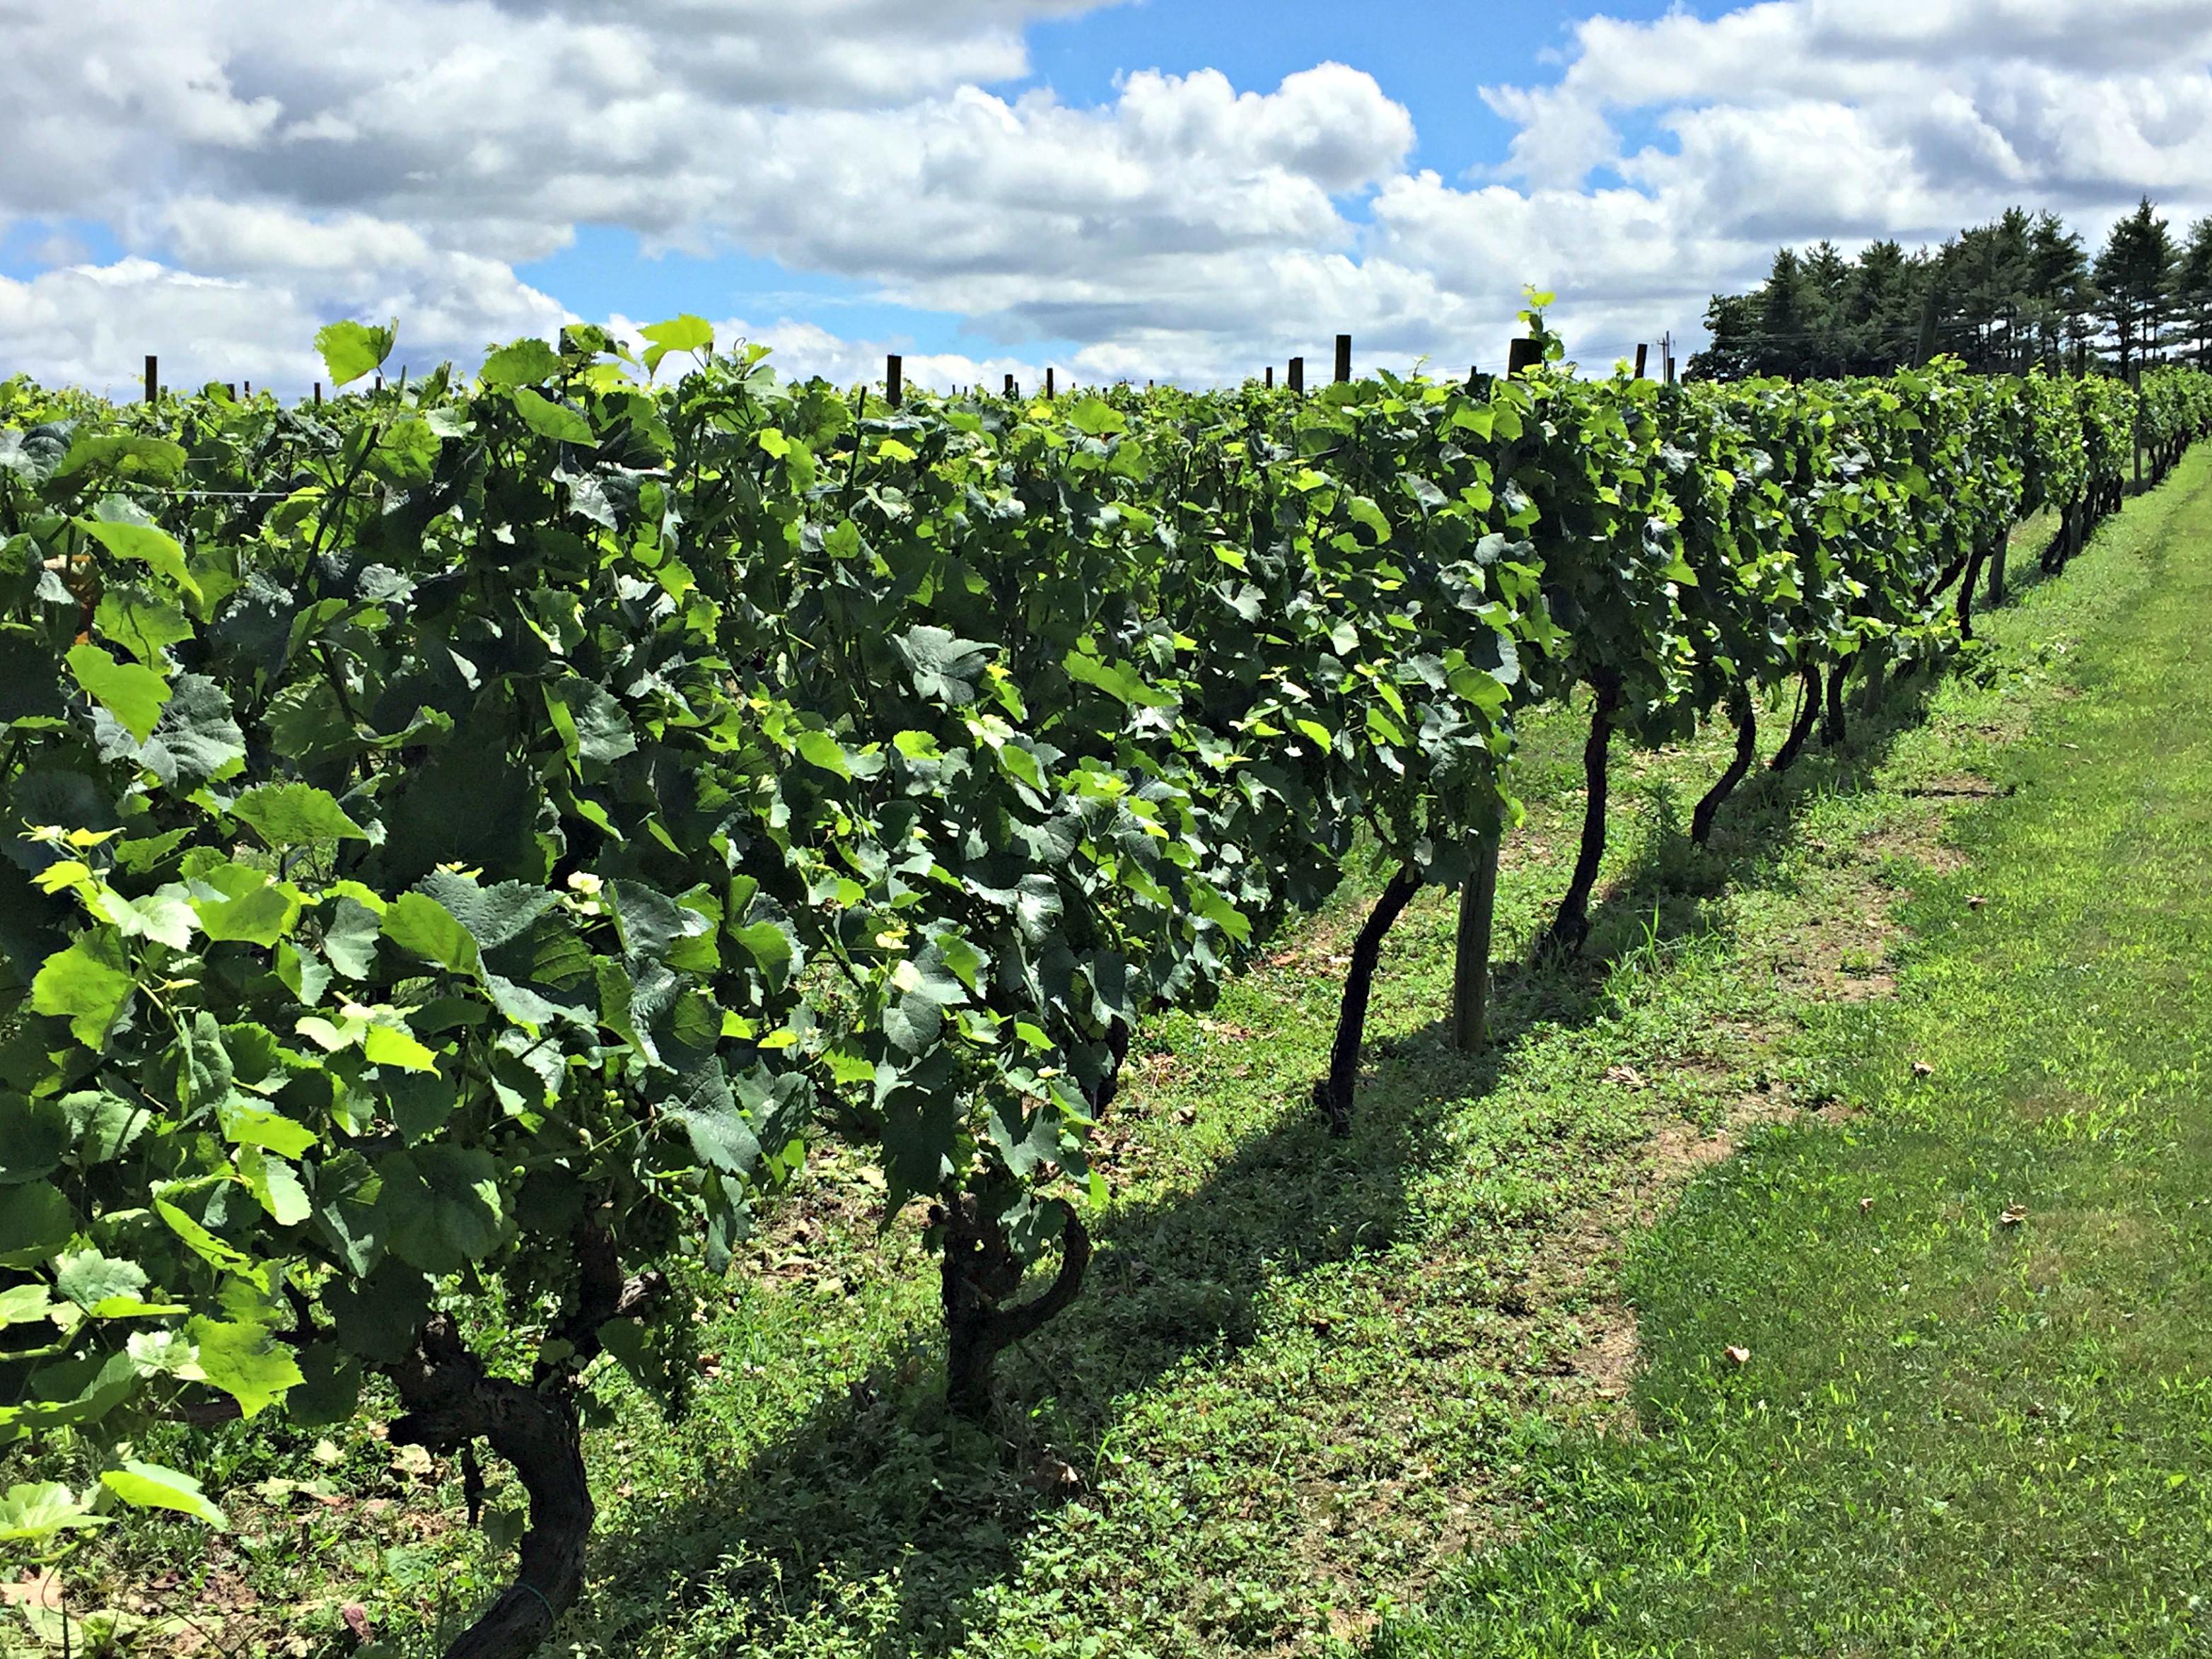 Wycombe Vineyards vines; photo credit Lynne Goldman